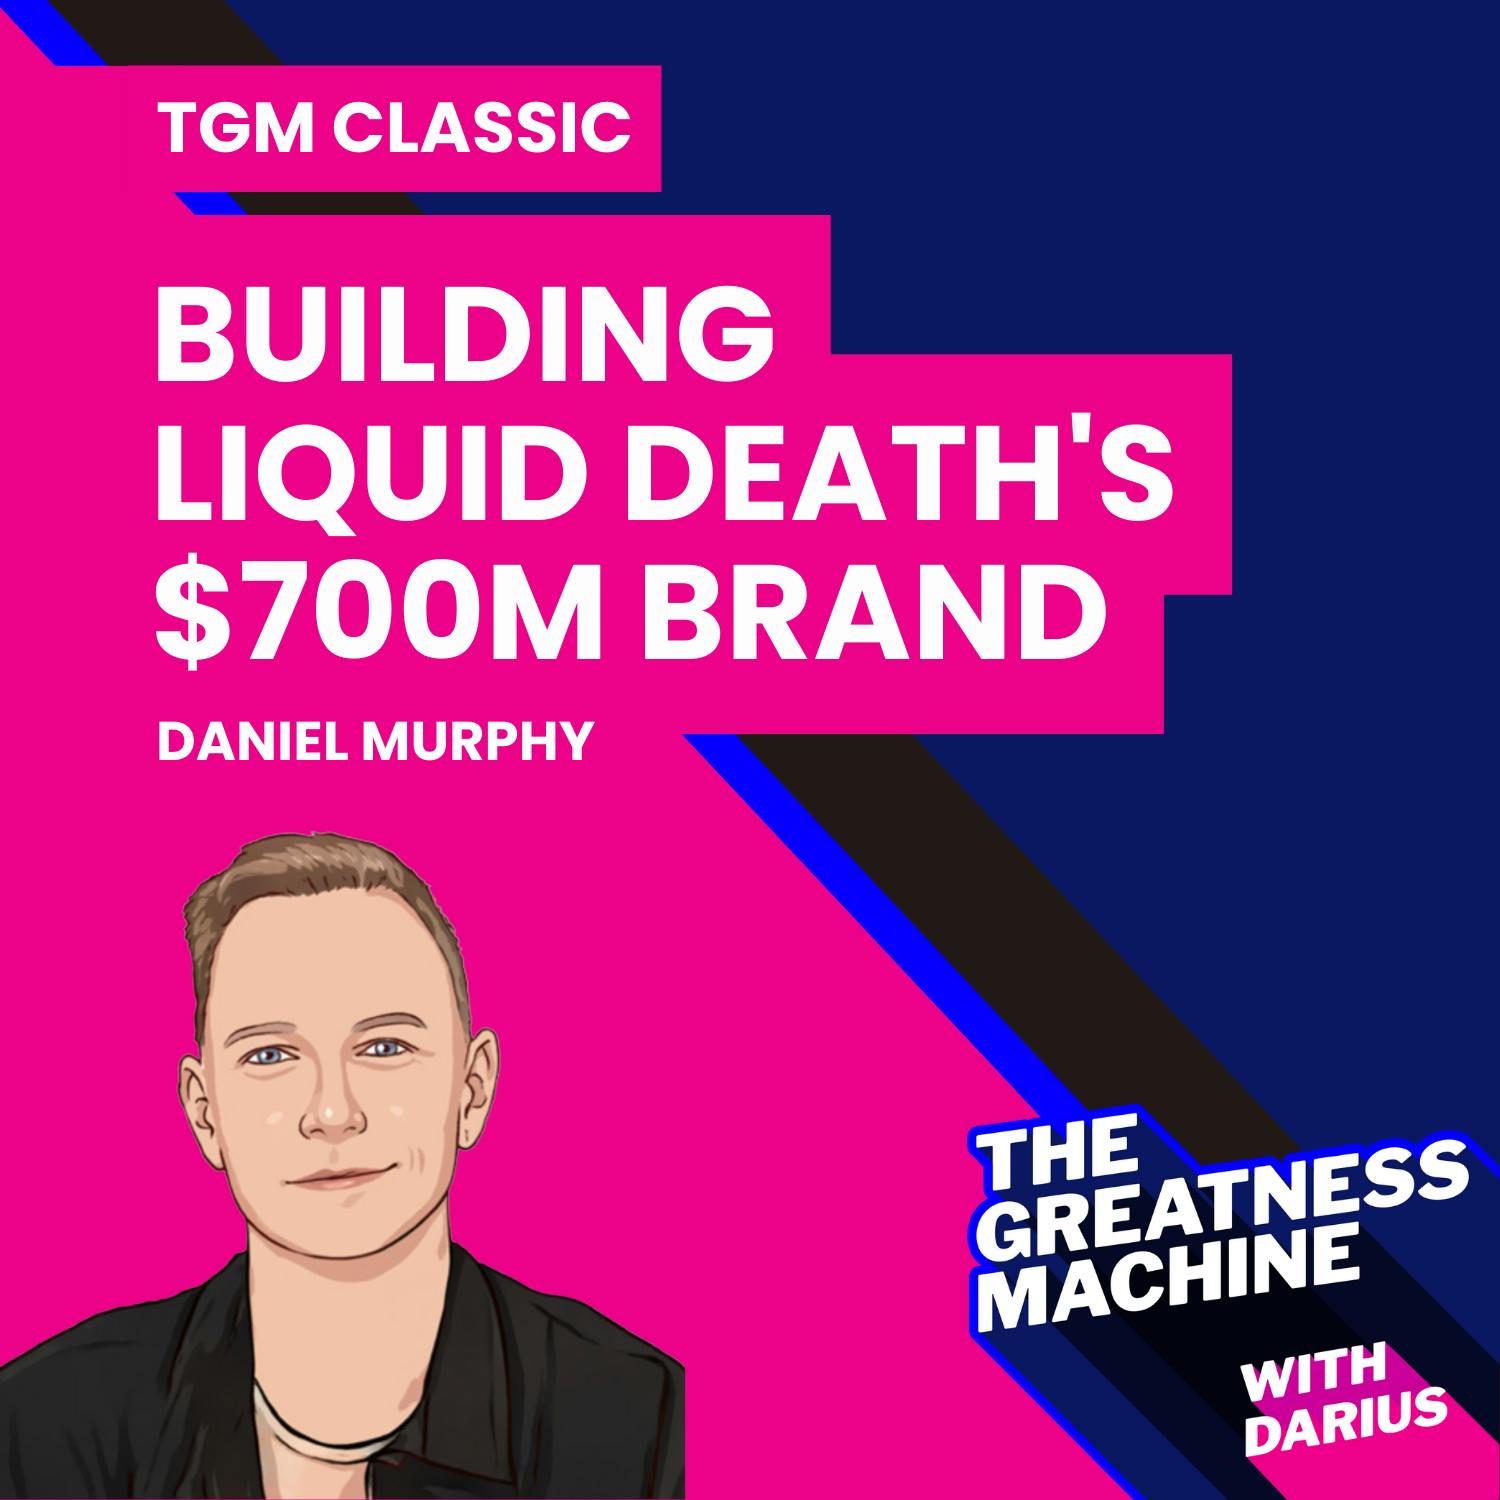 TGM Classic | Daniel Murphy | The Secret To Building Liquid Death’s $700M Brand In Just 3 Years